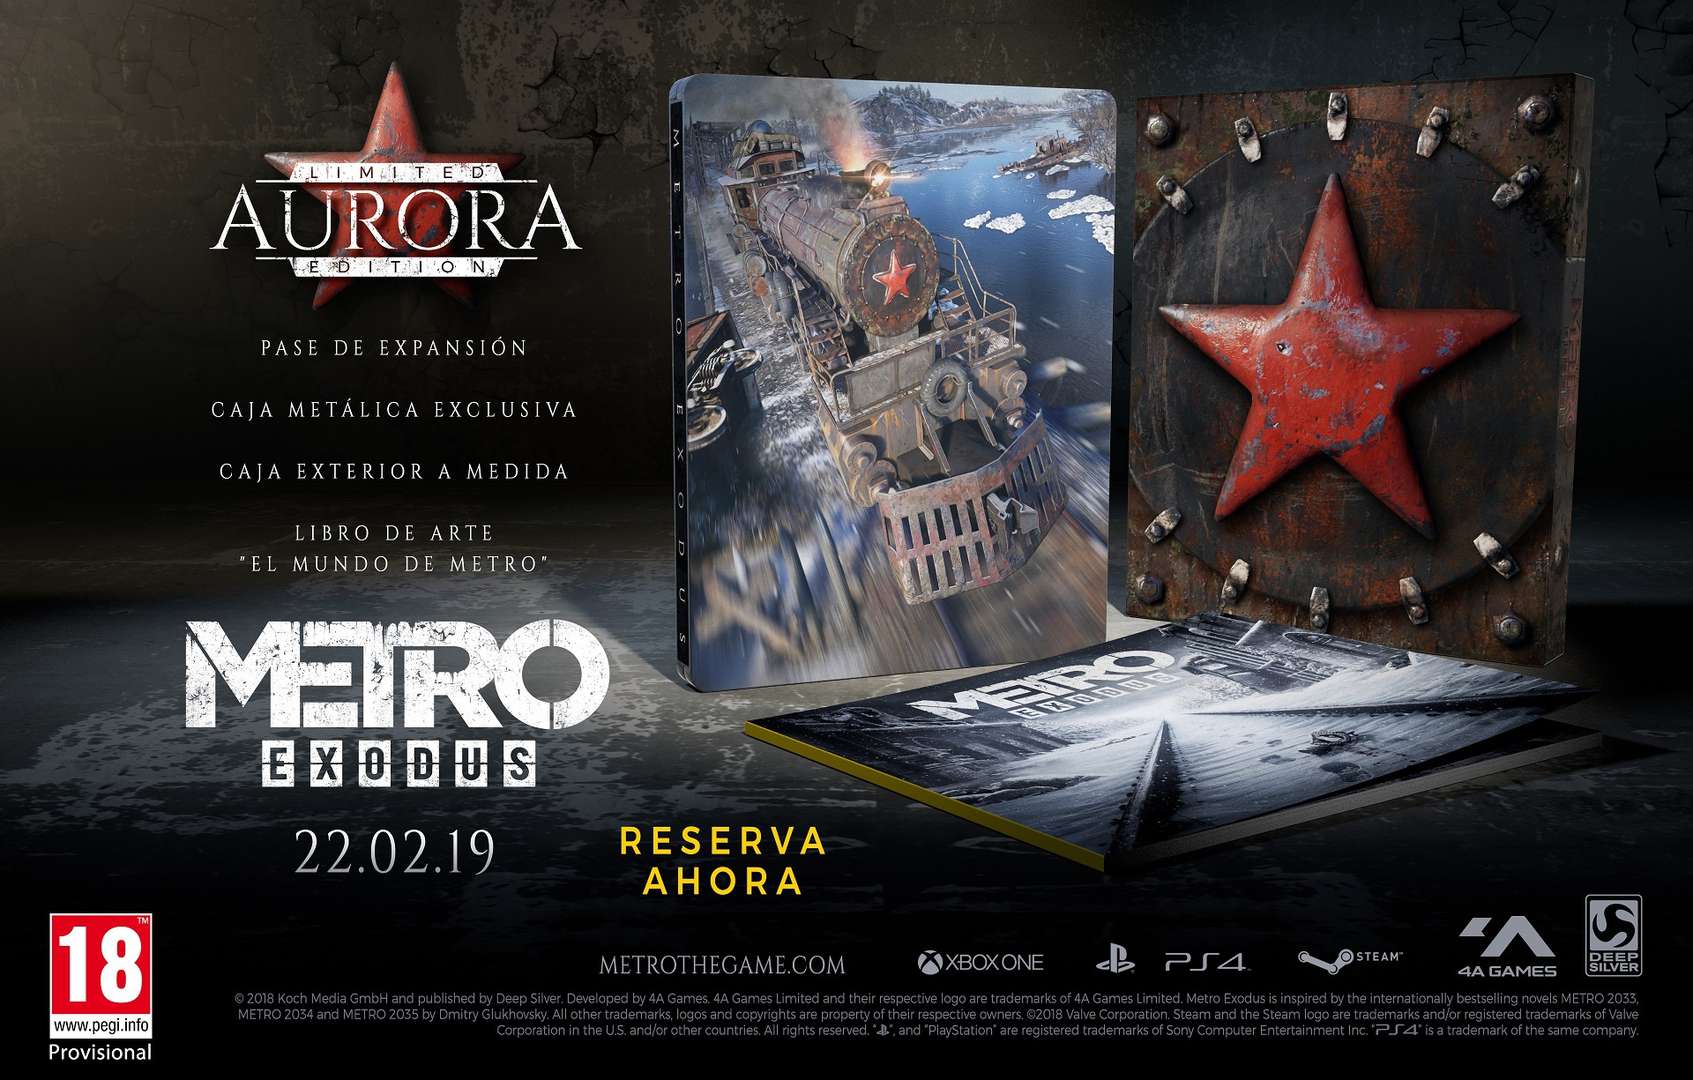 Presentada la Aurora Limited Edition de Metro Exodus